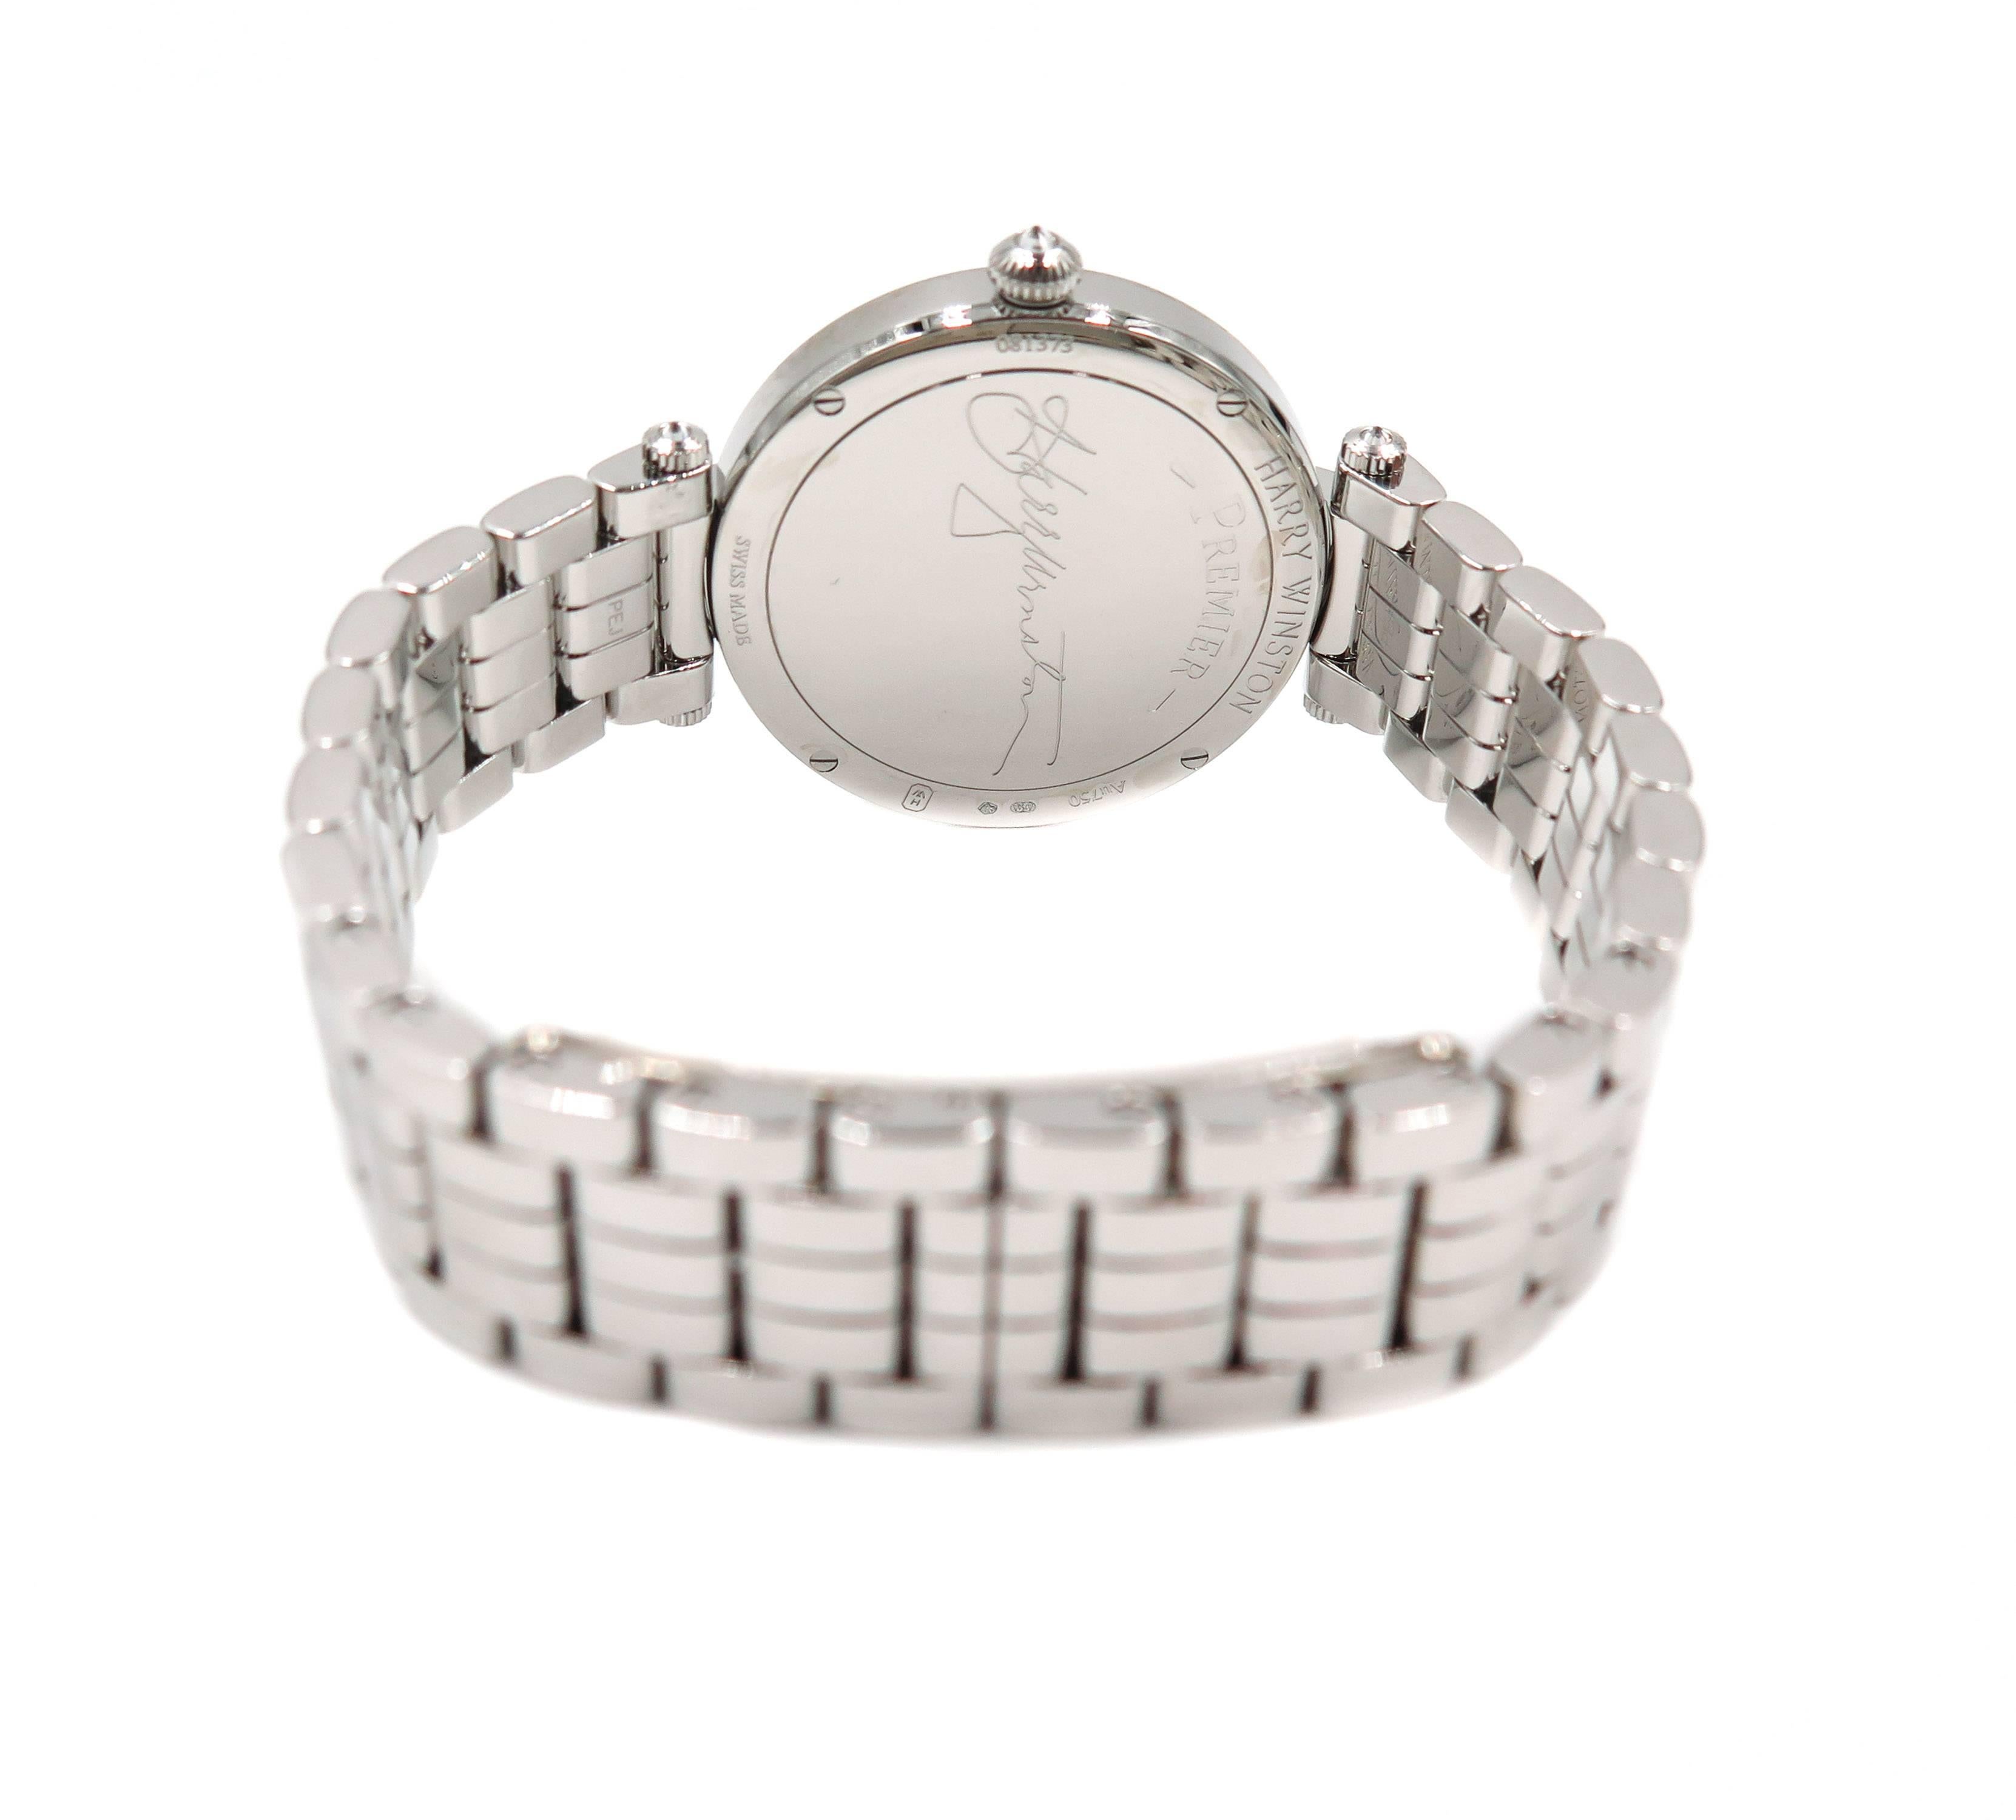 Modern Harry Winston Ladies White Gold Diamond Premier quartz Wristwatch